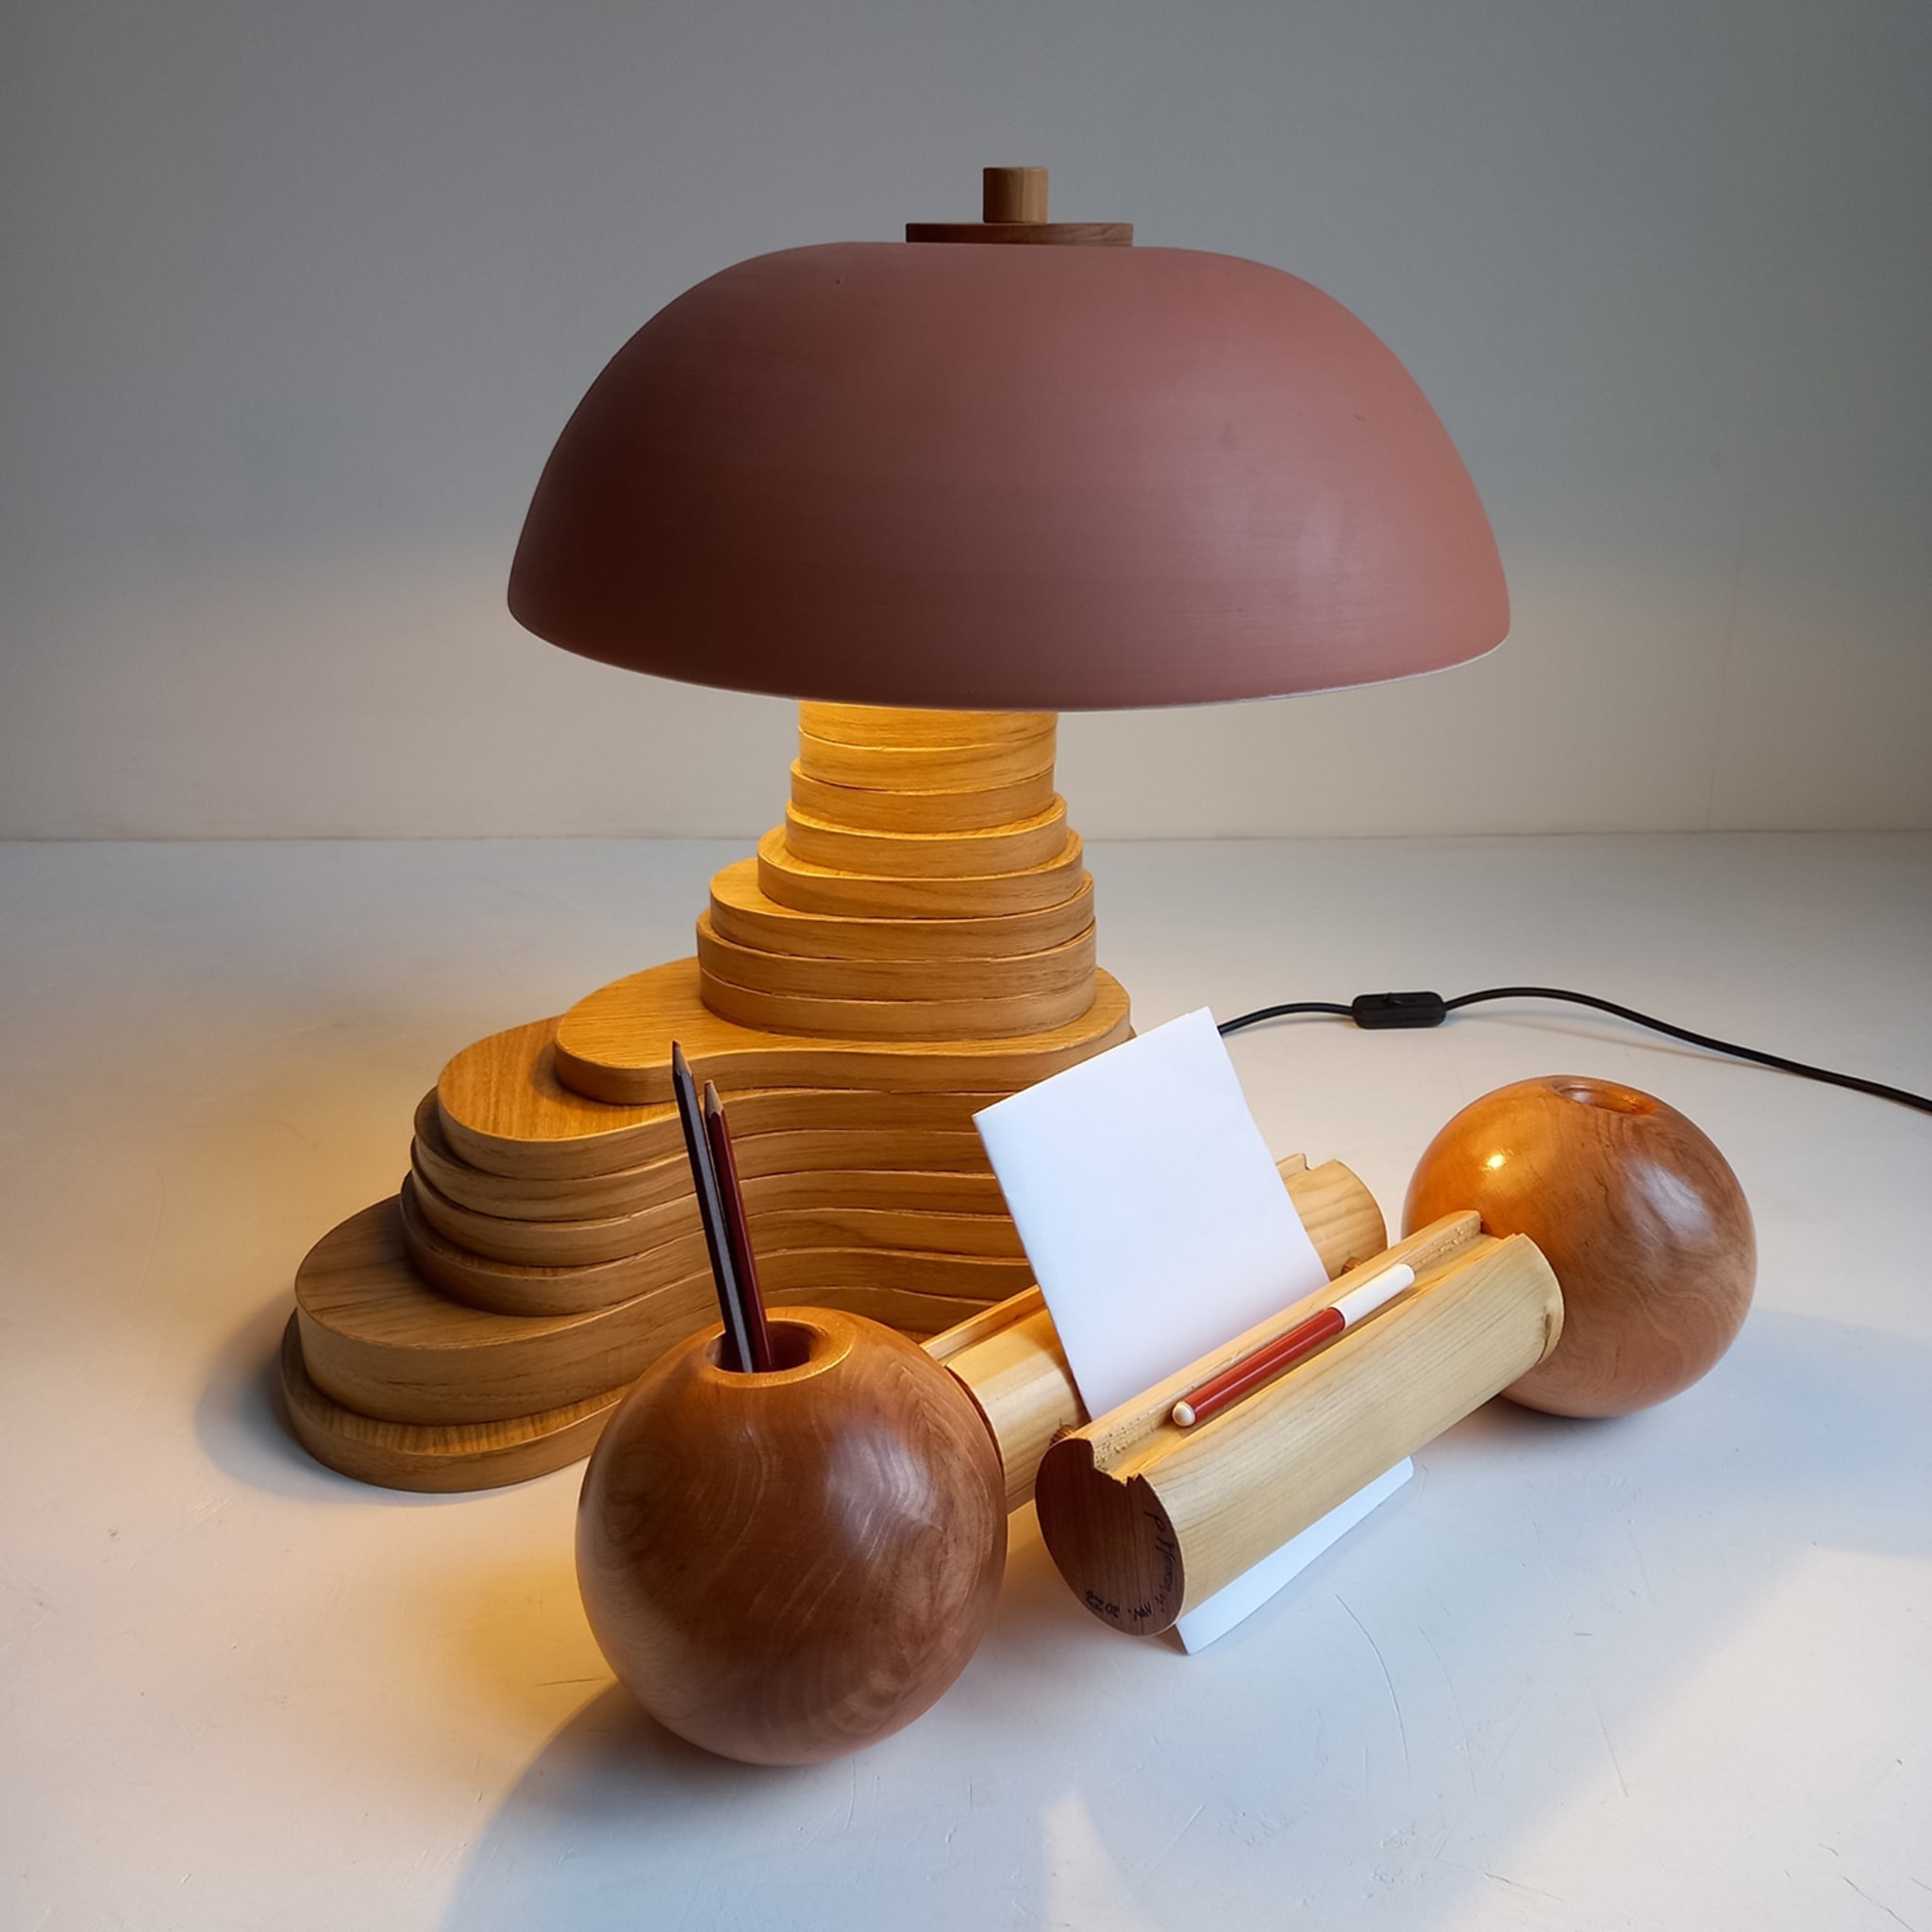 Fungus Table Lamp by Pietro Meccani - Alternative view 4